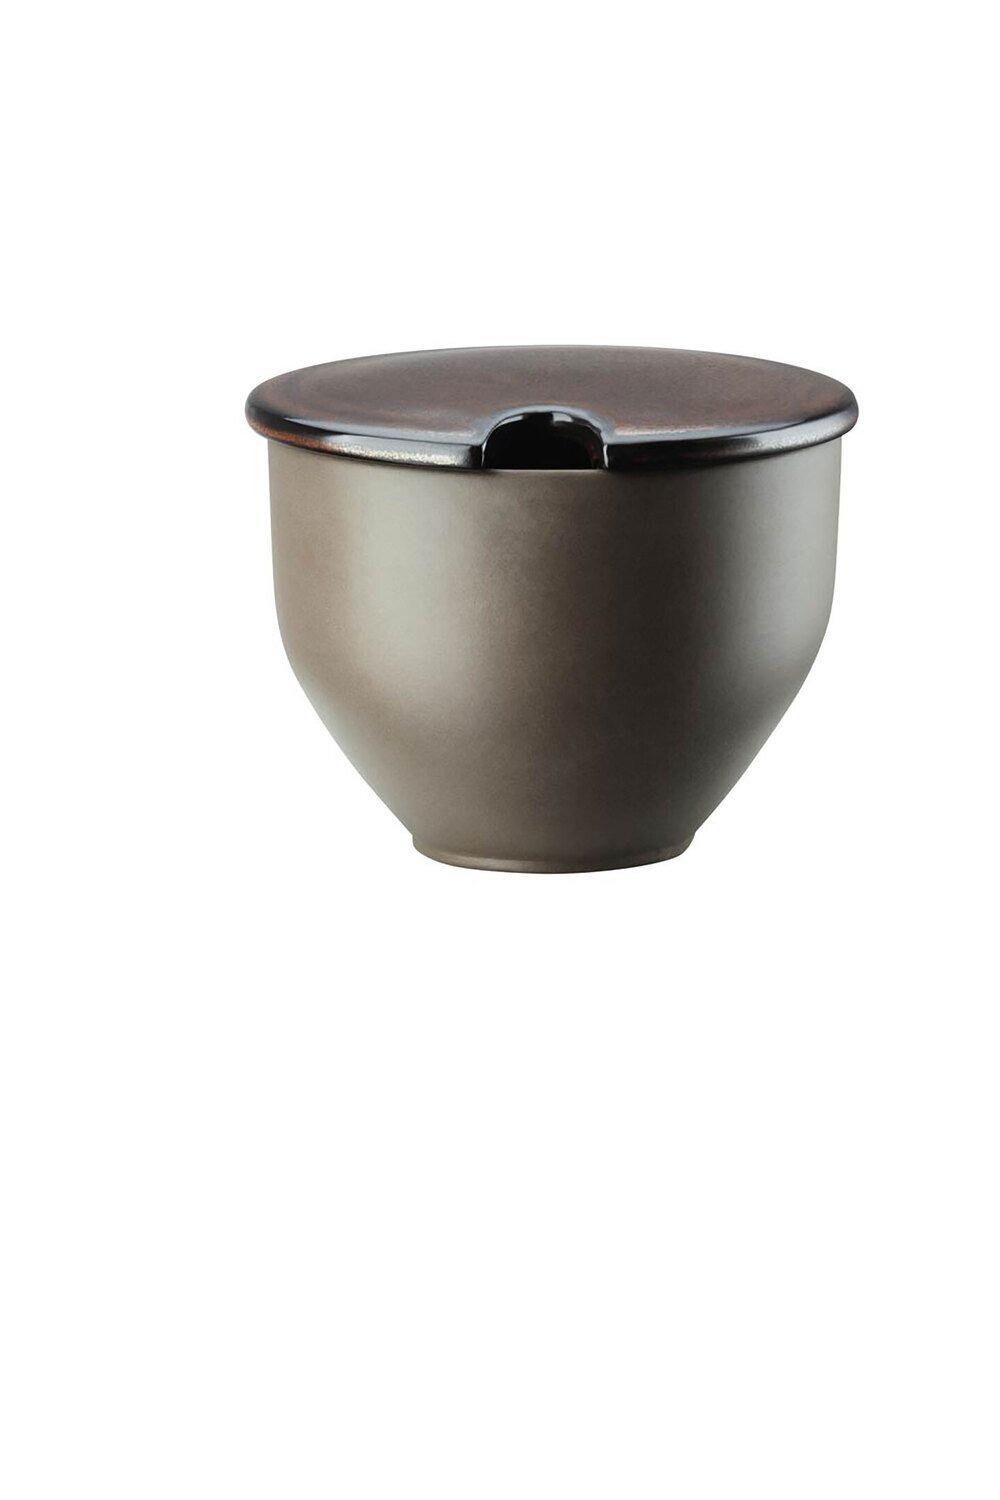 Rosenthal Junto -Bronze Stoneware Covered Sugar Bowl Set w indent 8 1/2 oz